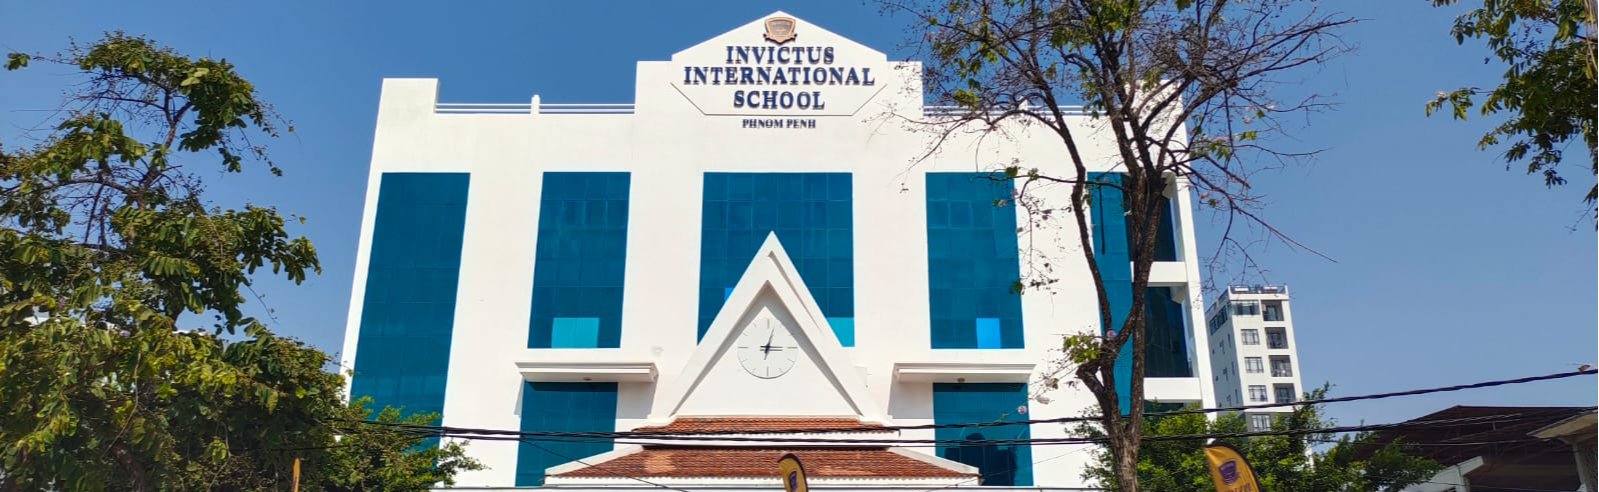 Invictus International School Banner